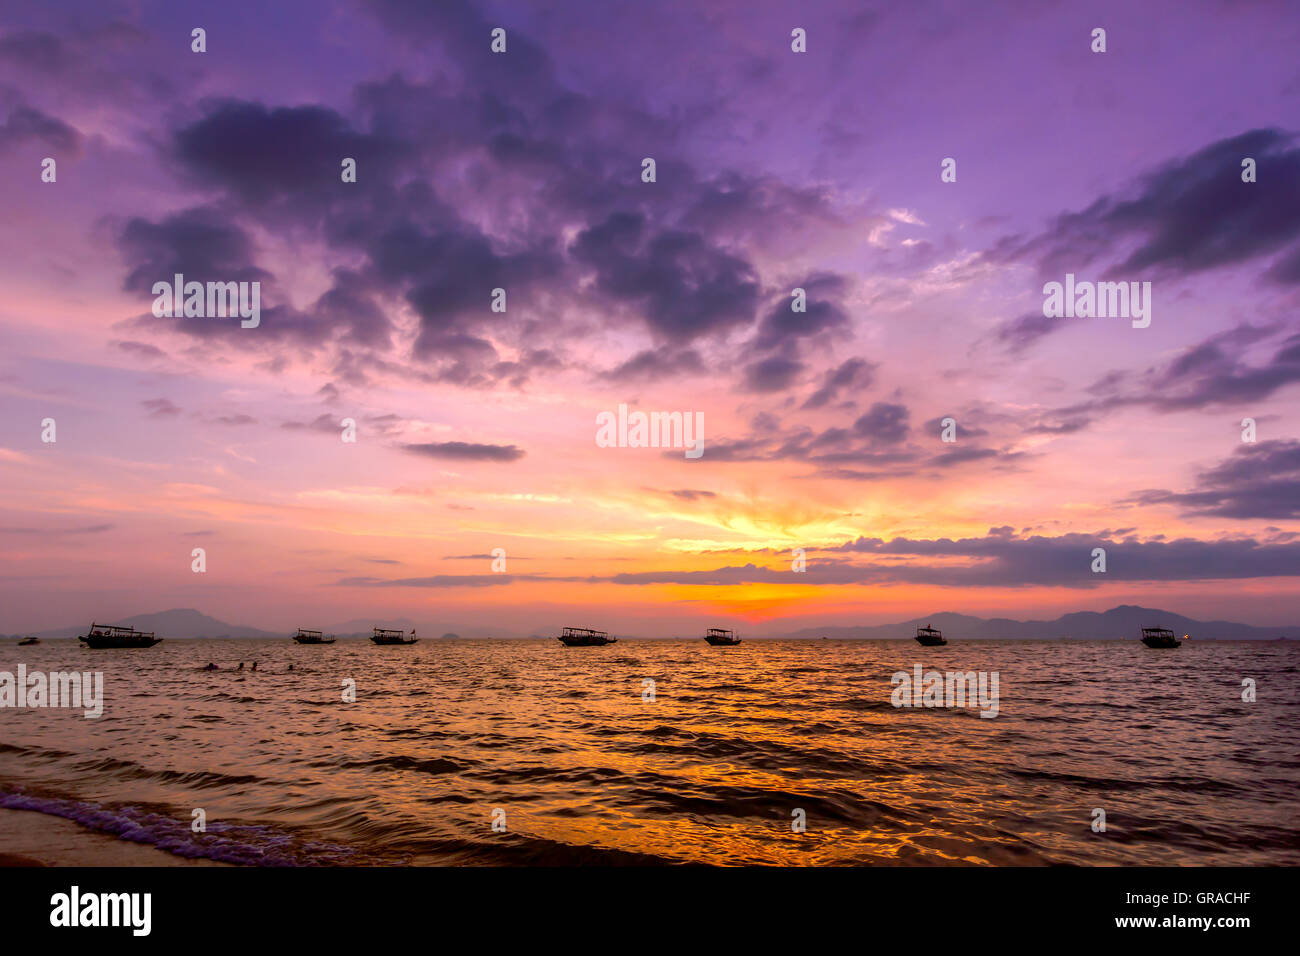 Sea fishing boat sunset scenery Stock Photo